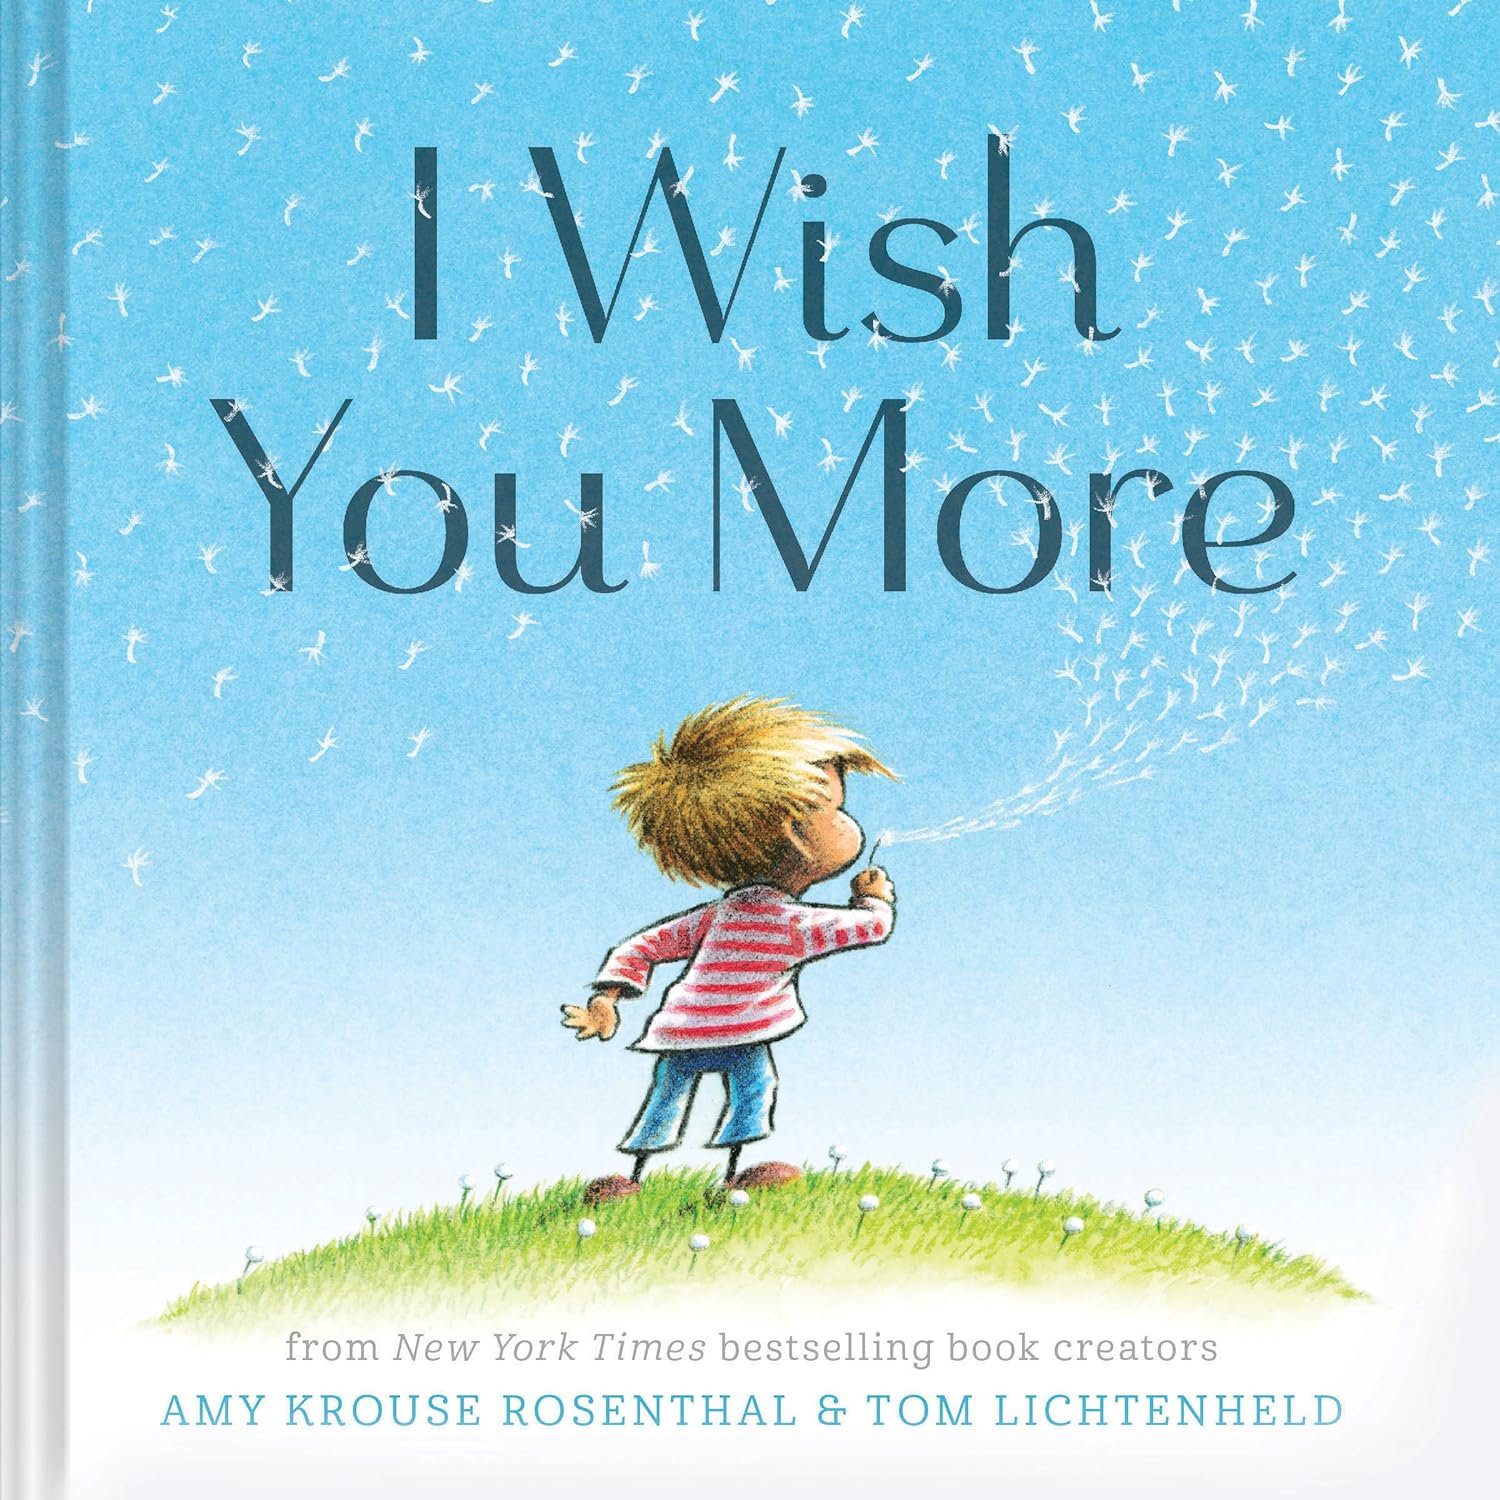 "I Wish You More" Book